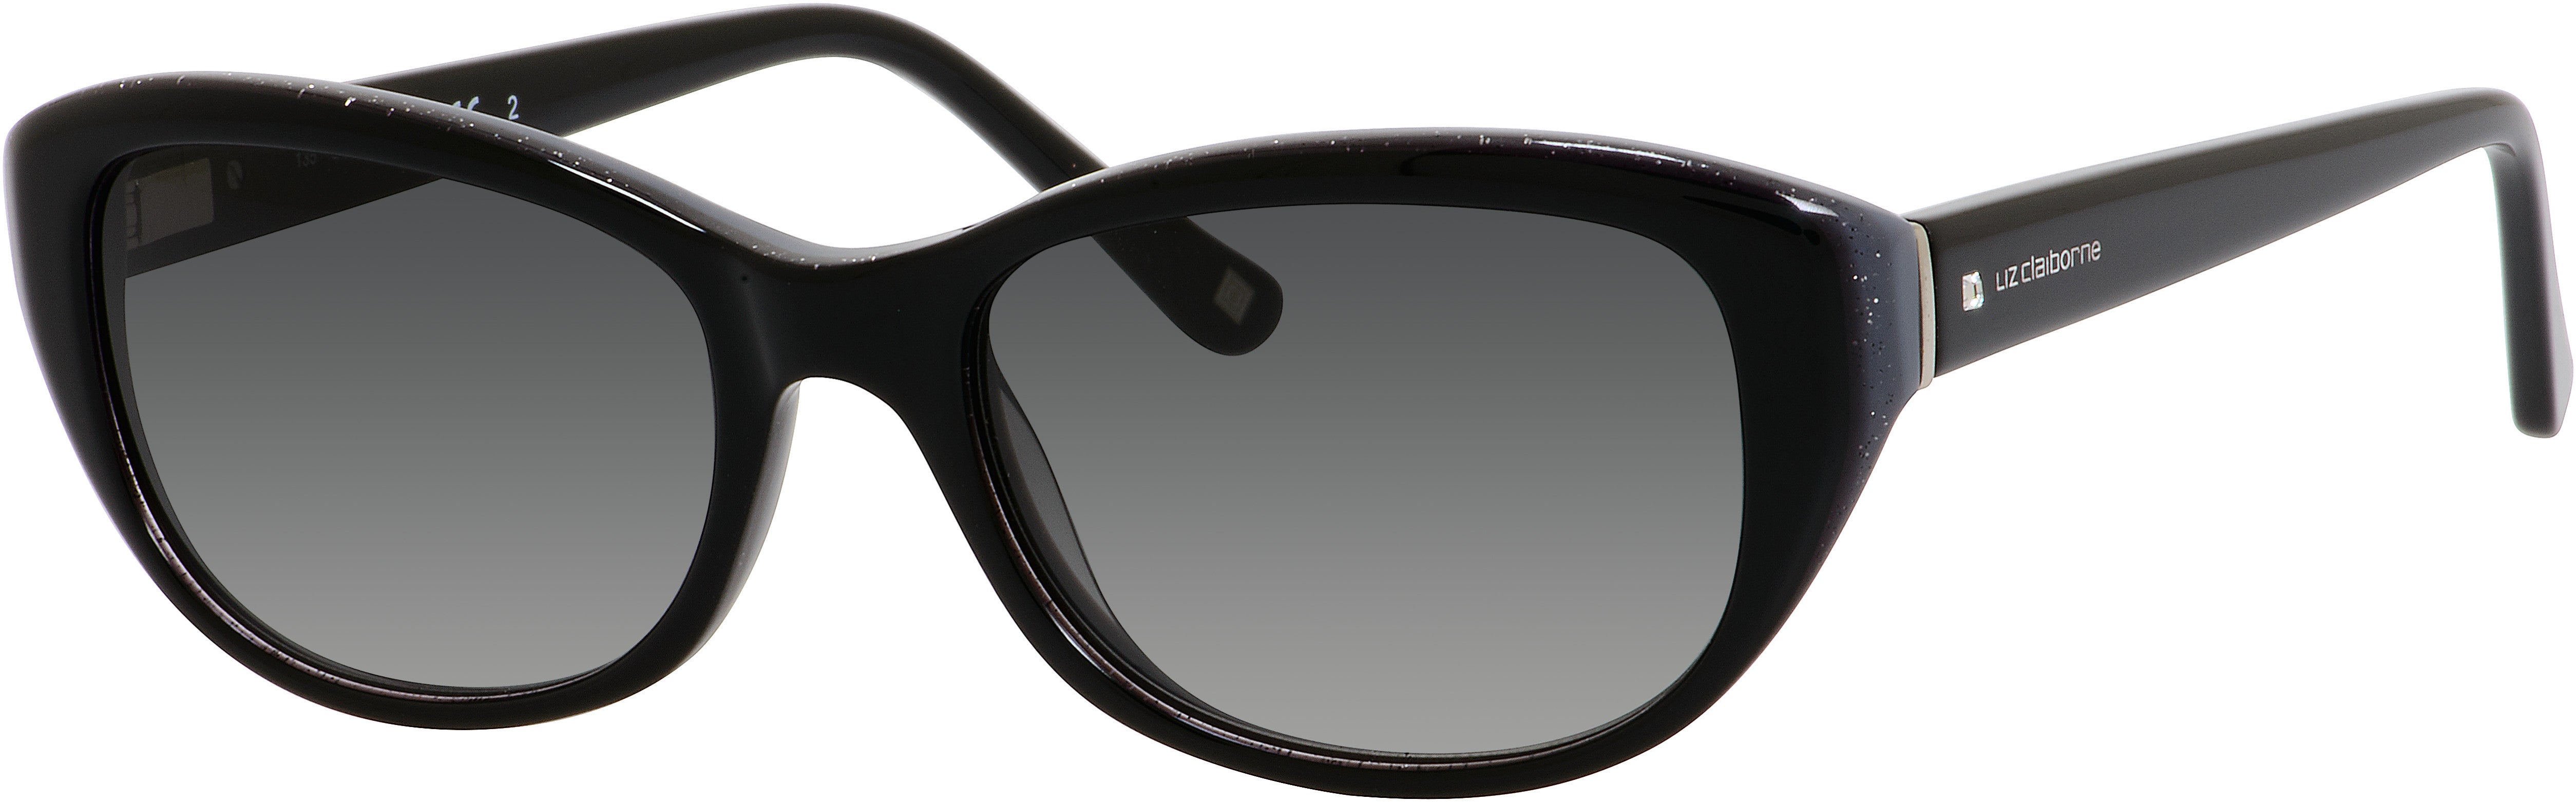  Liz Claiborne 561/S Oval Sunglasses 0DV1-0DV1  Black Lurex (F8 Gray Gradient)